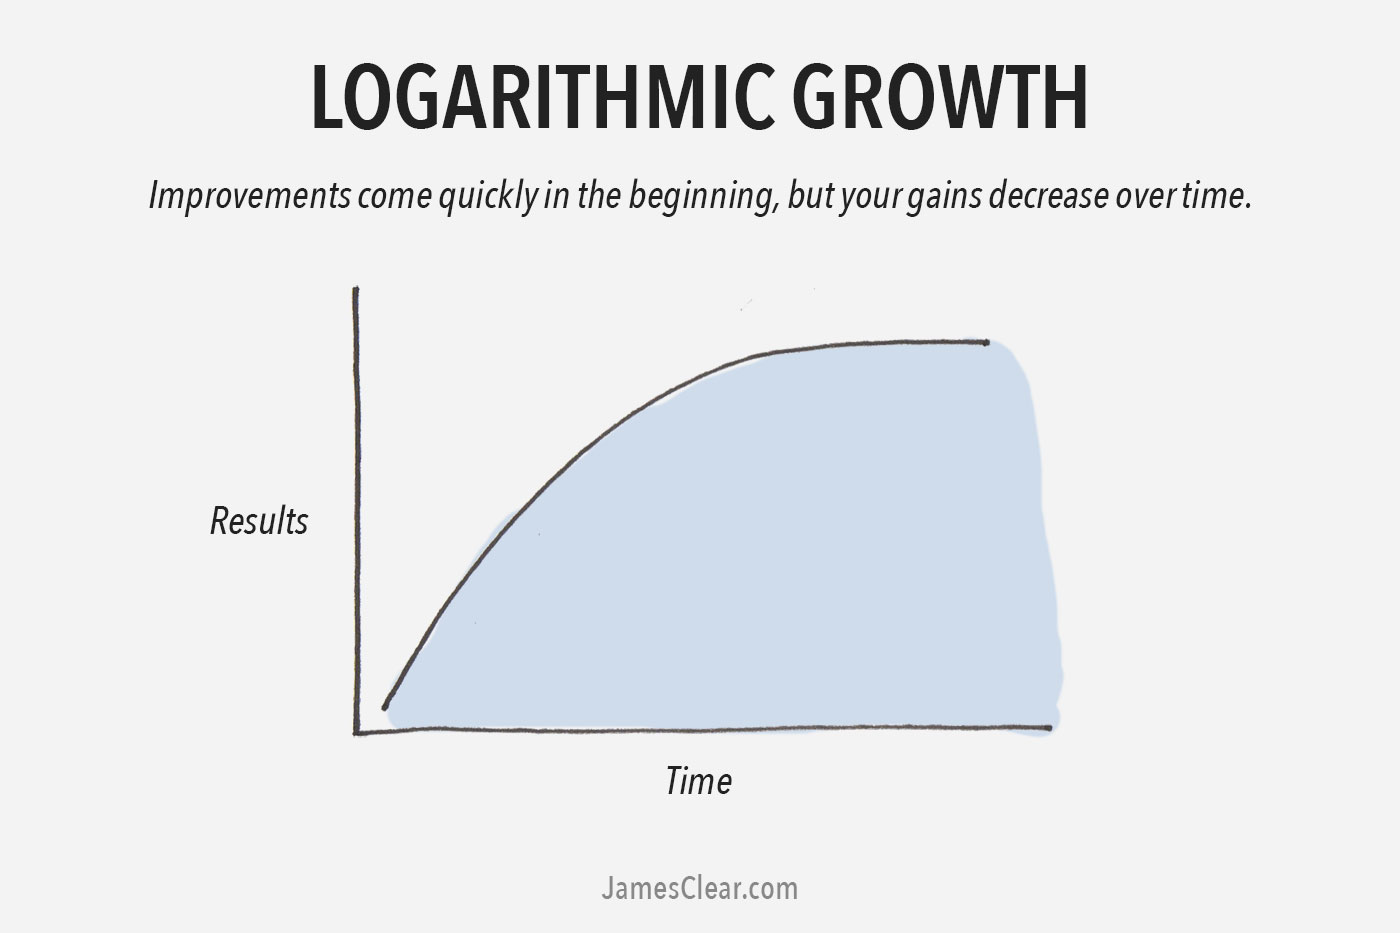 Logarithmic growth curve